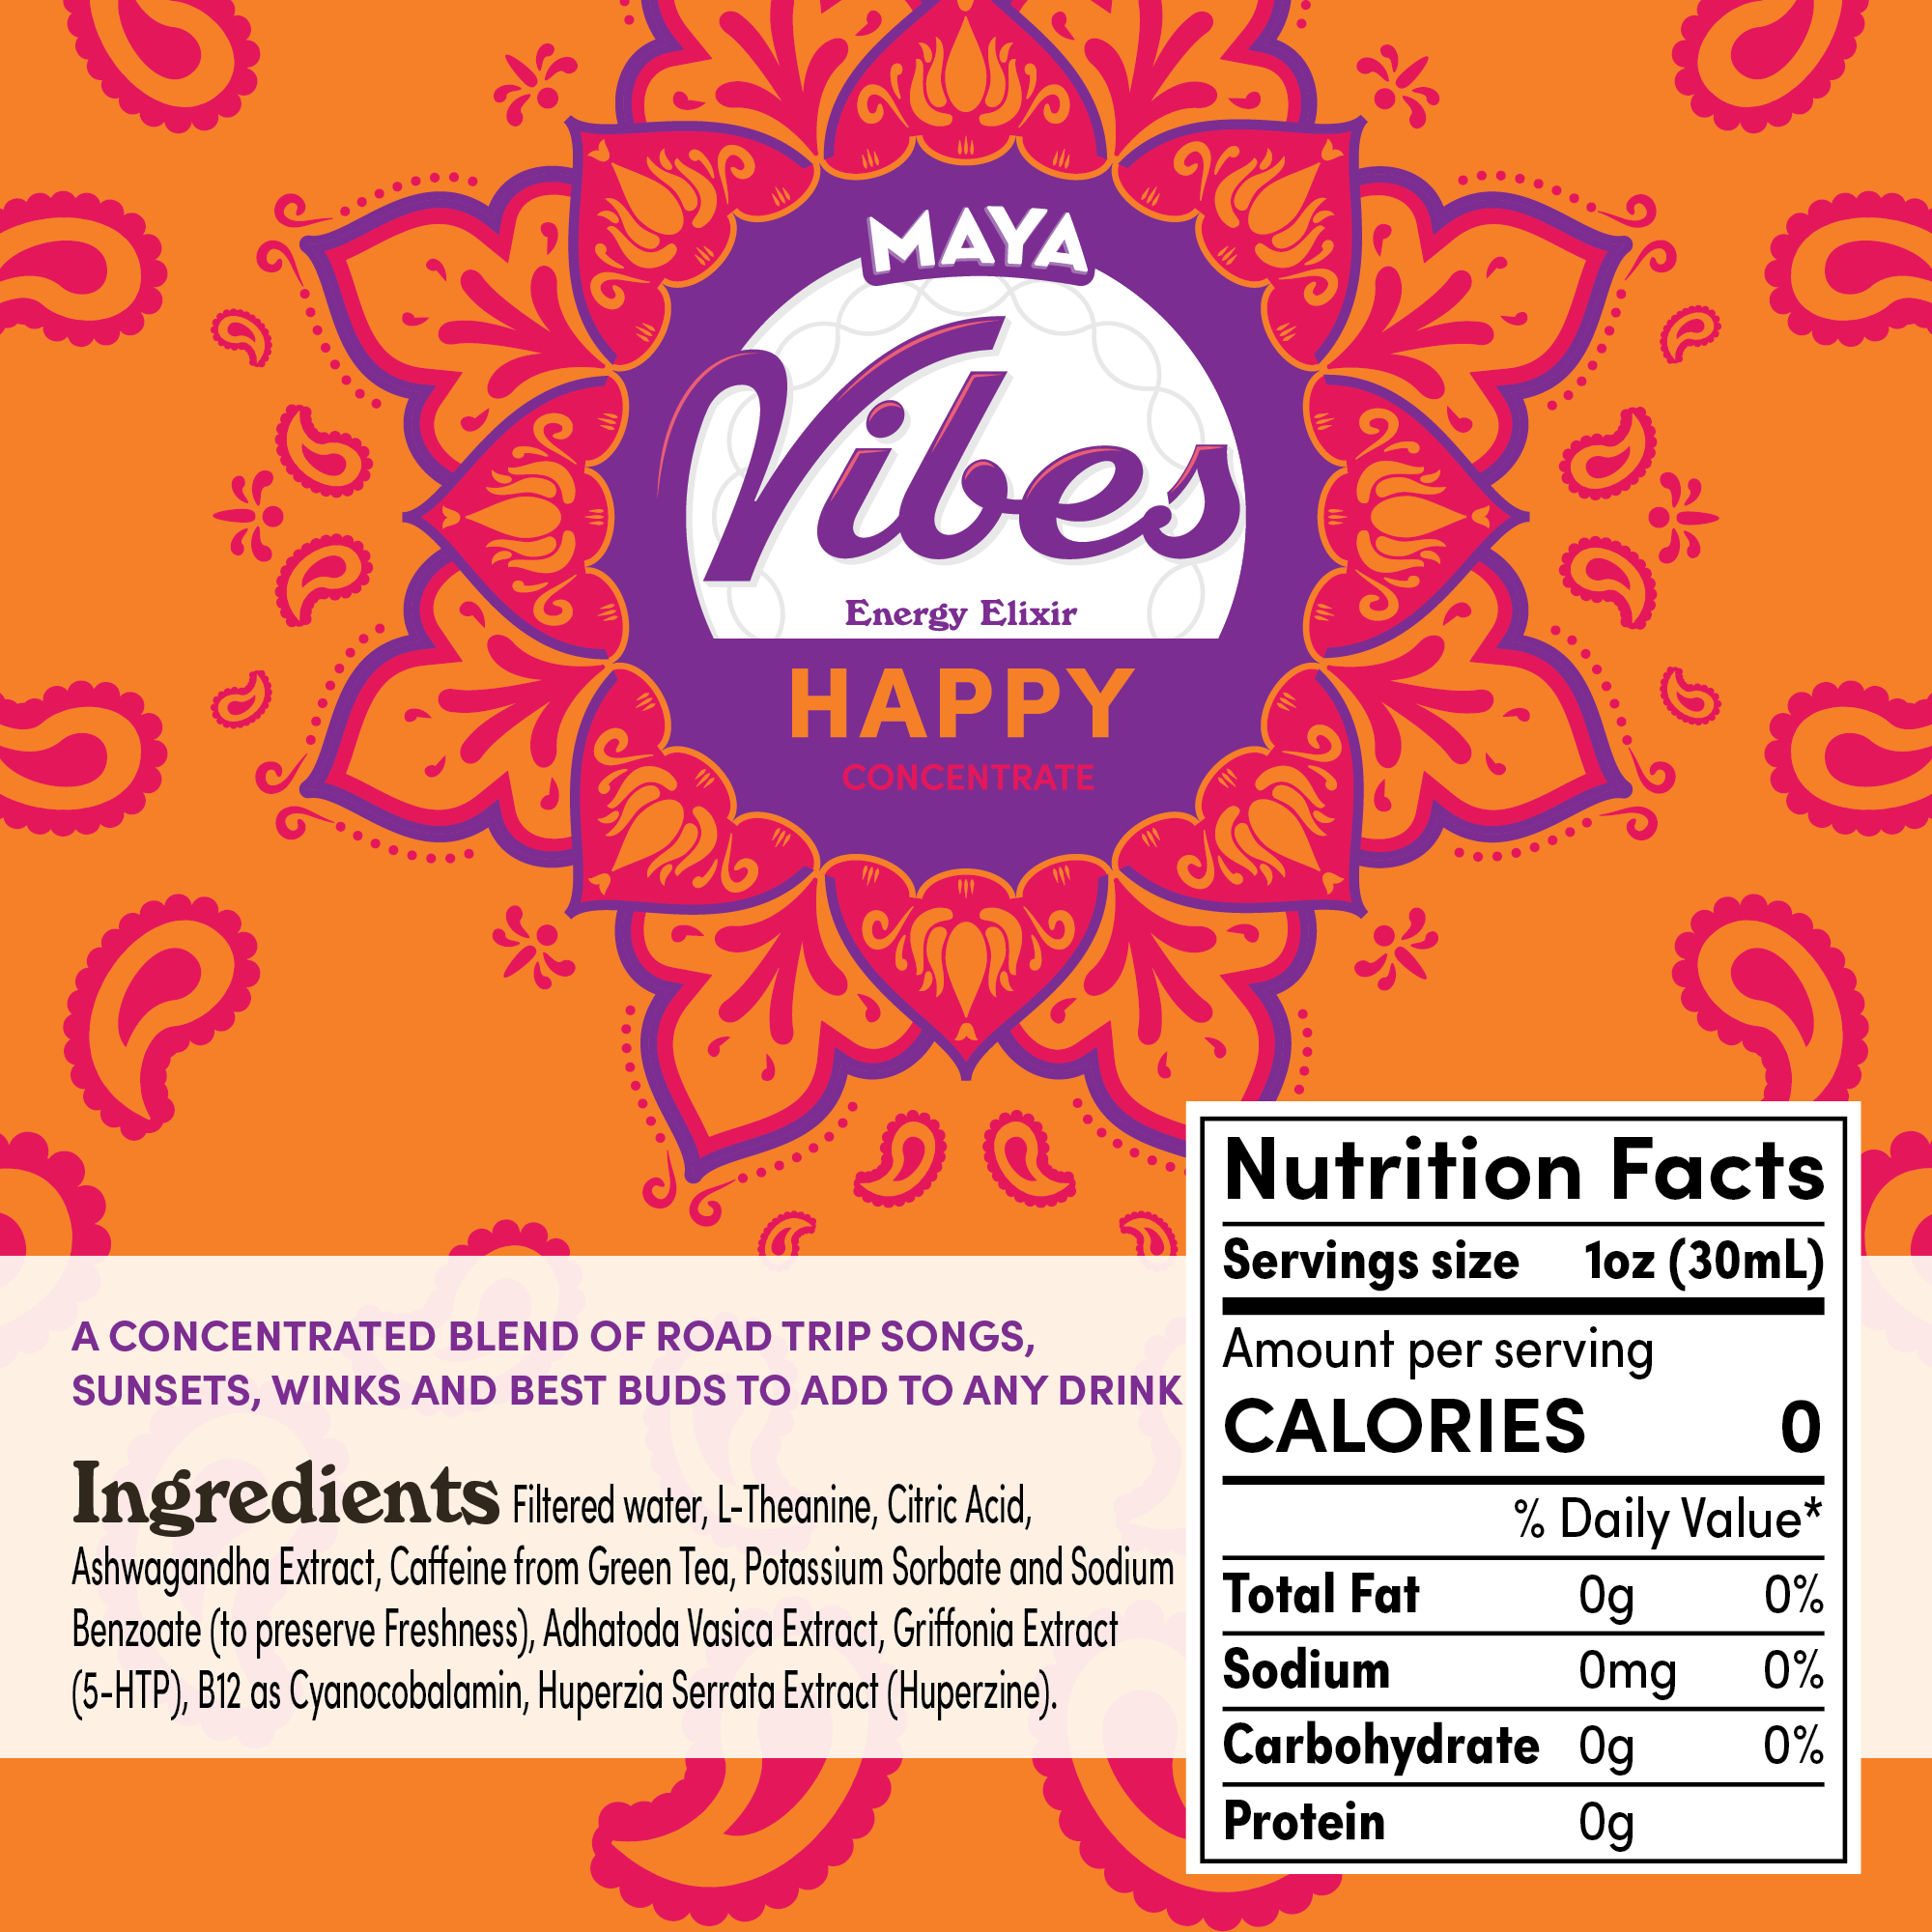 Maya Vibes Happy